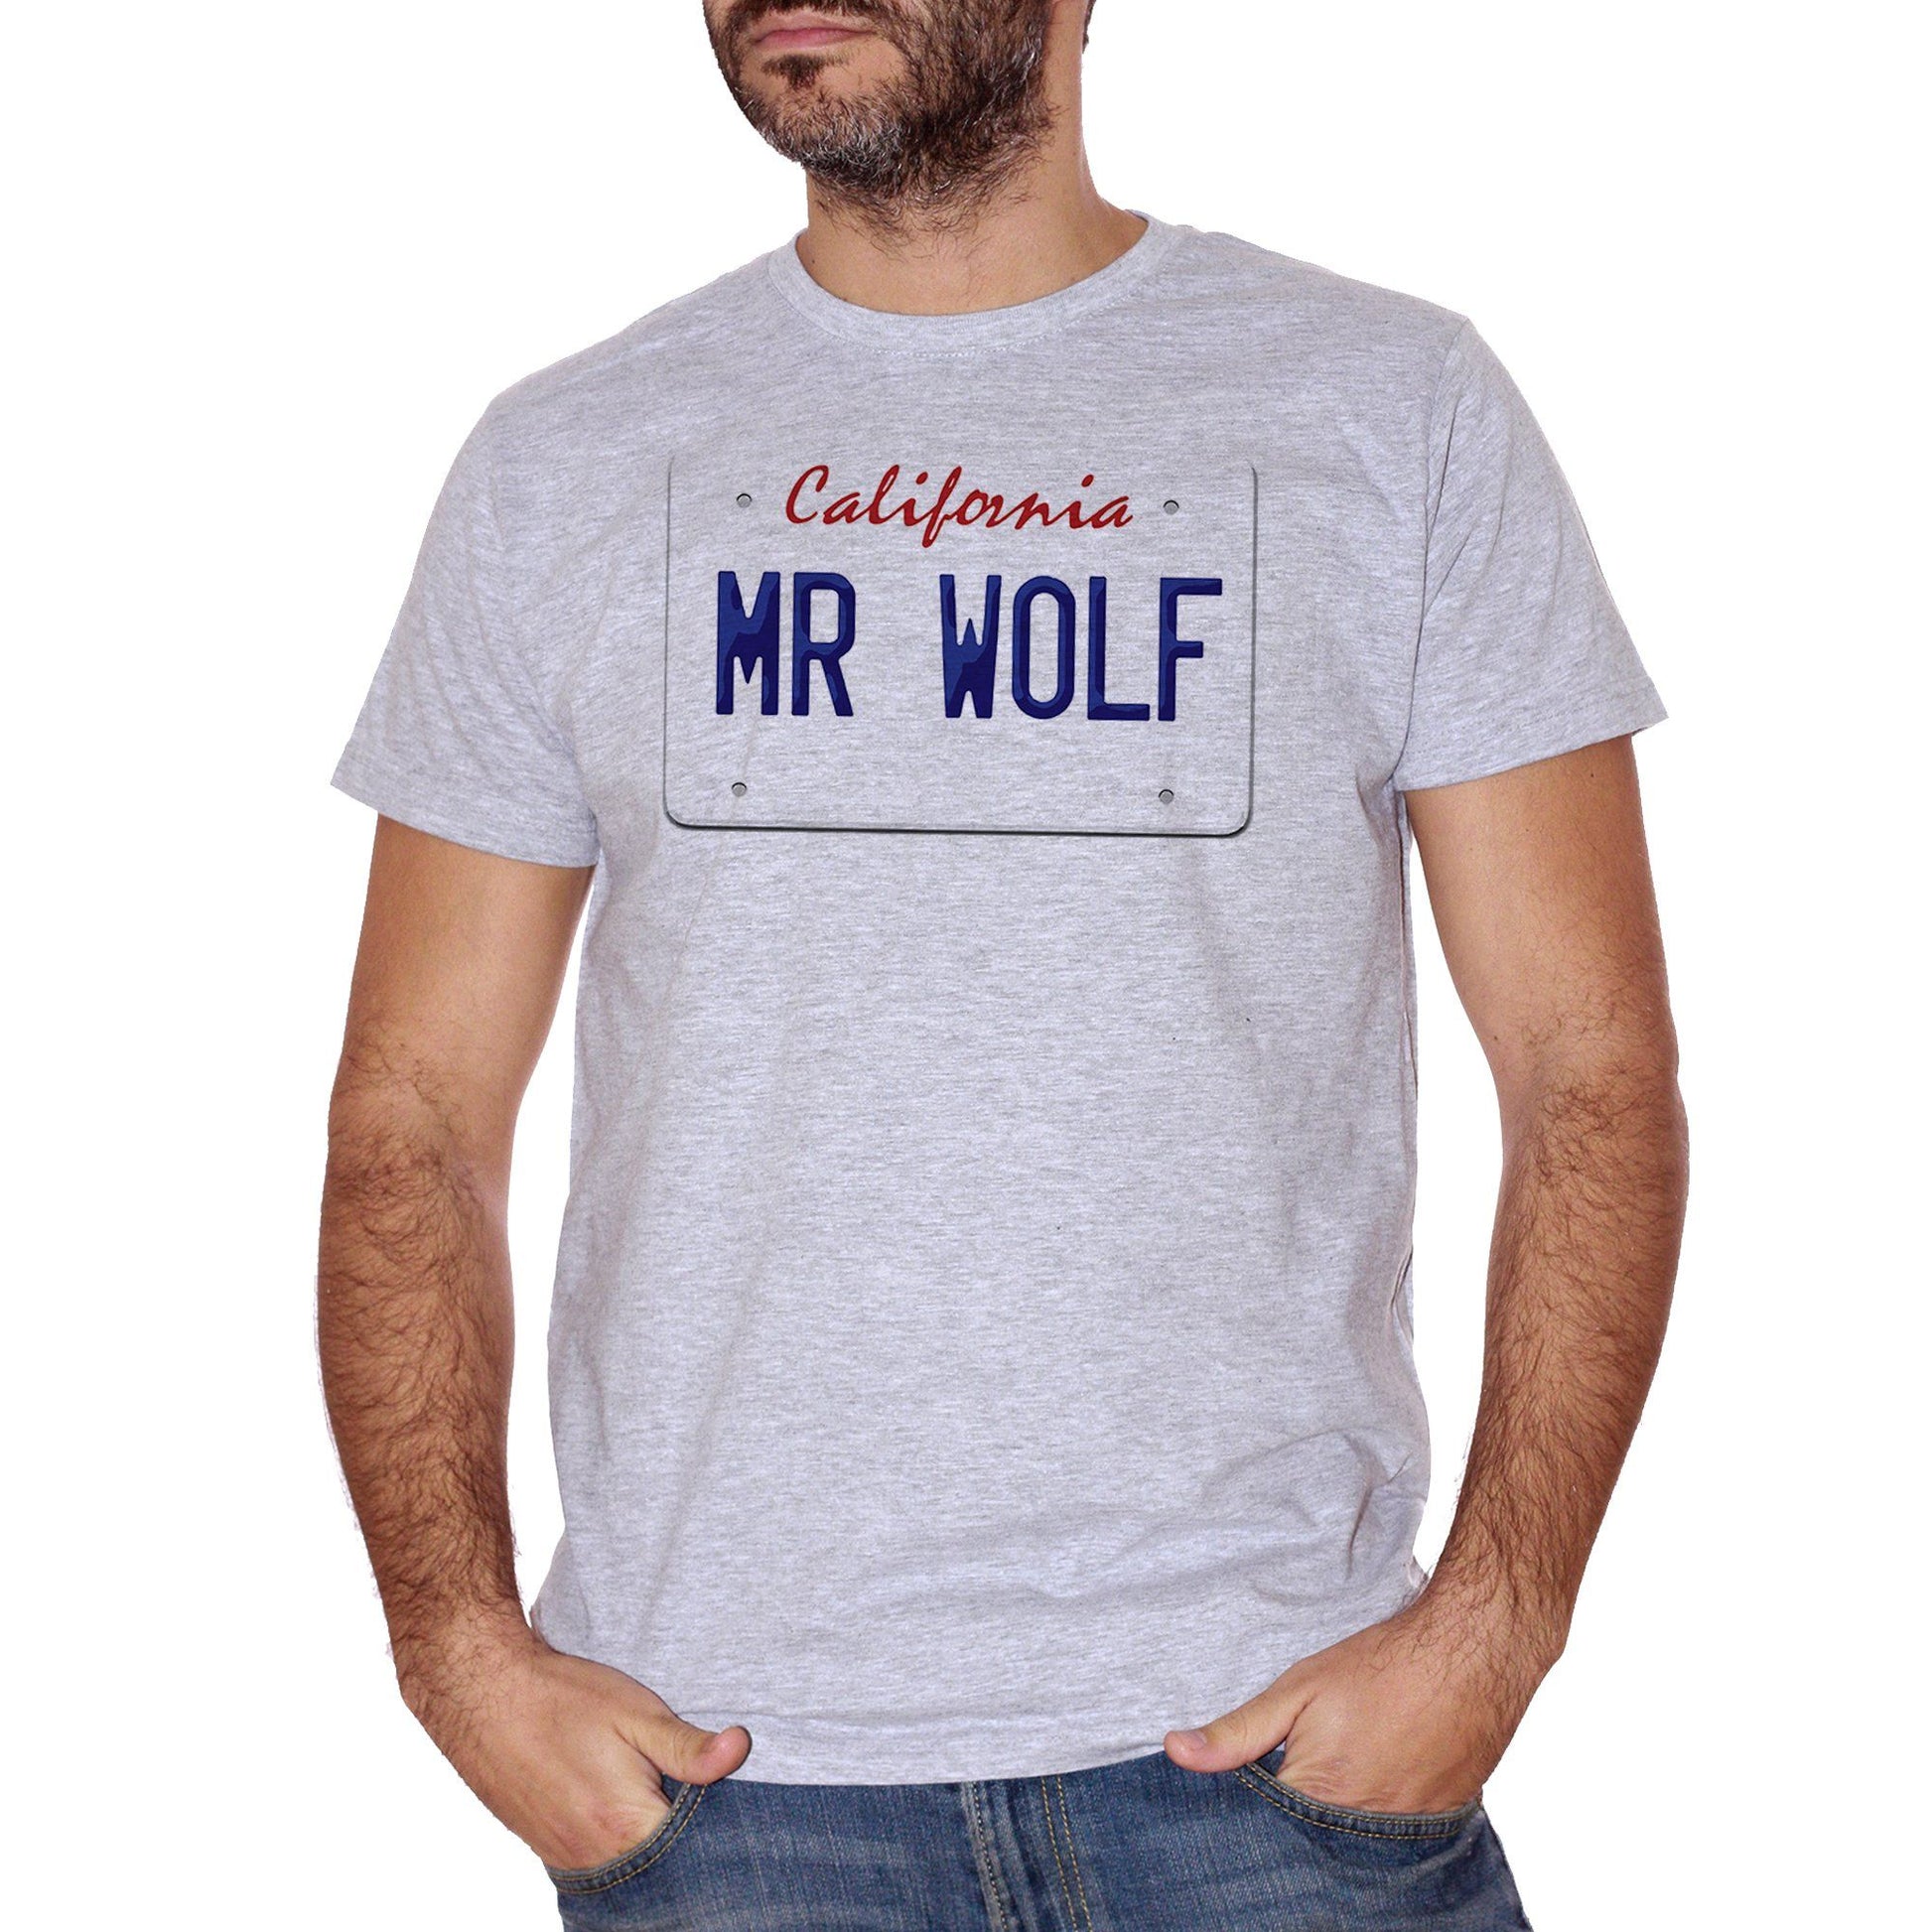 Thistle T-Shirt Mr Wolf Targa Pulp Fiction California - FILM CucShop